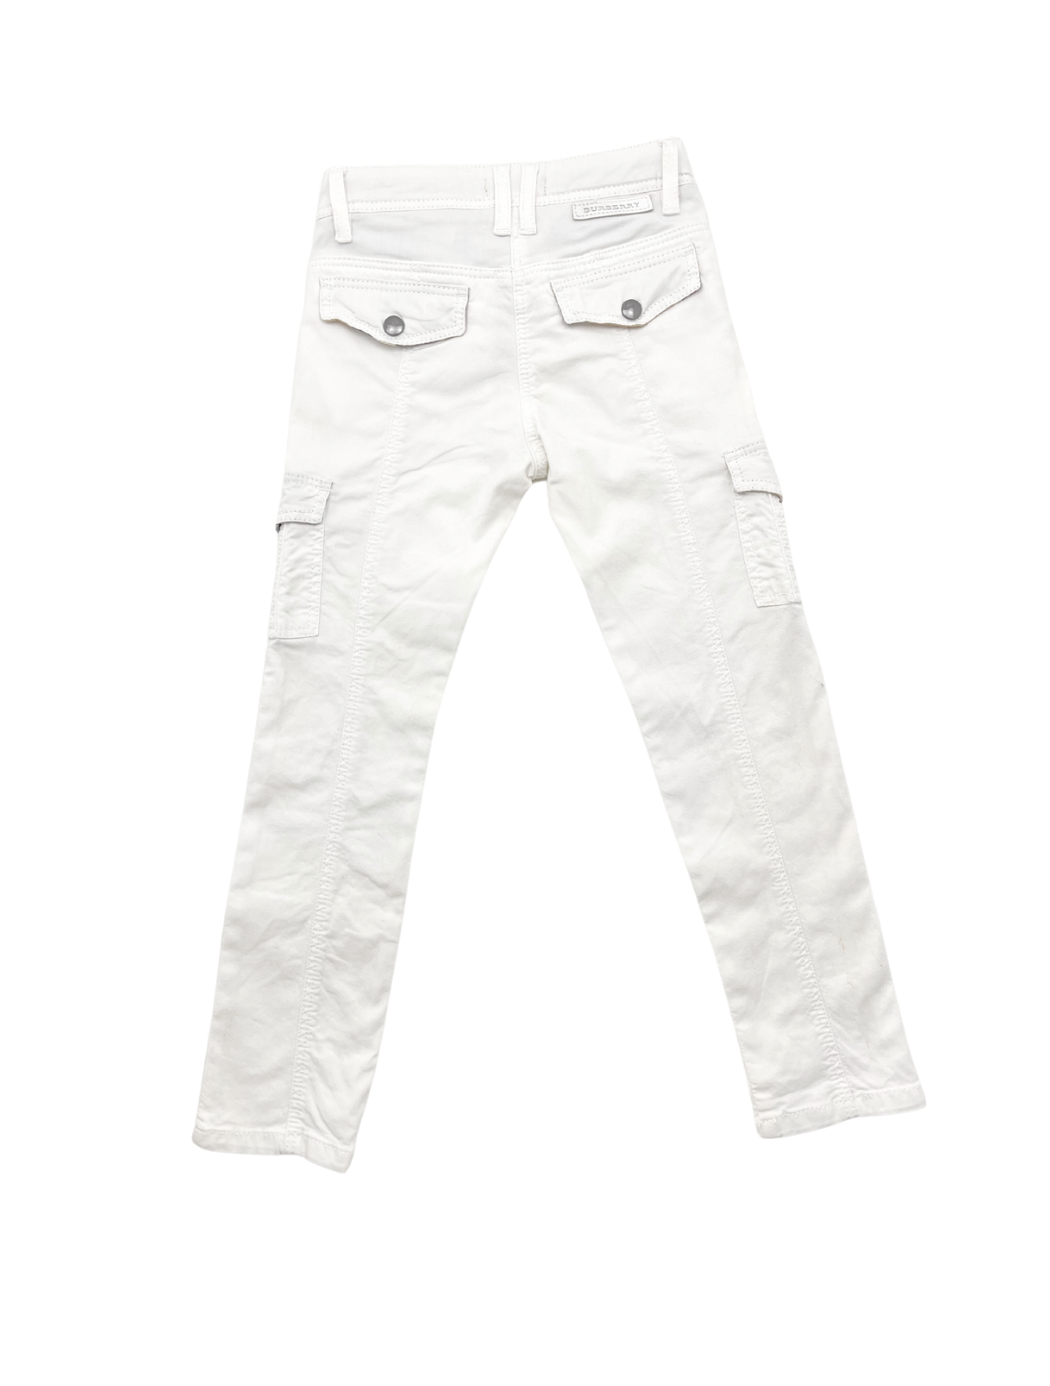 BURBERRY - Pantalon à poches blanc - 6 ans